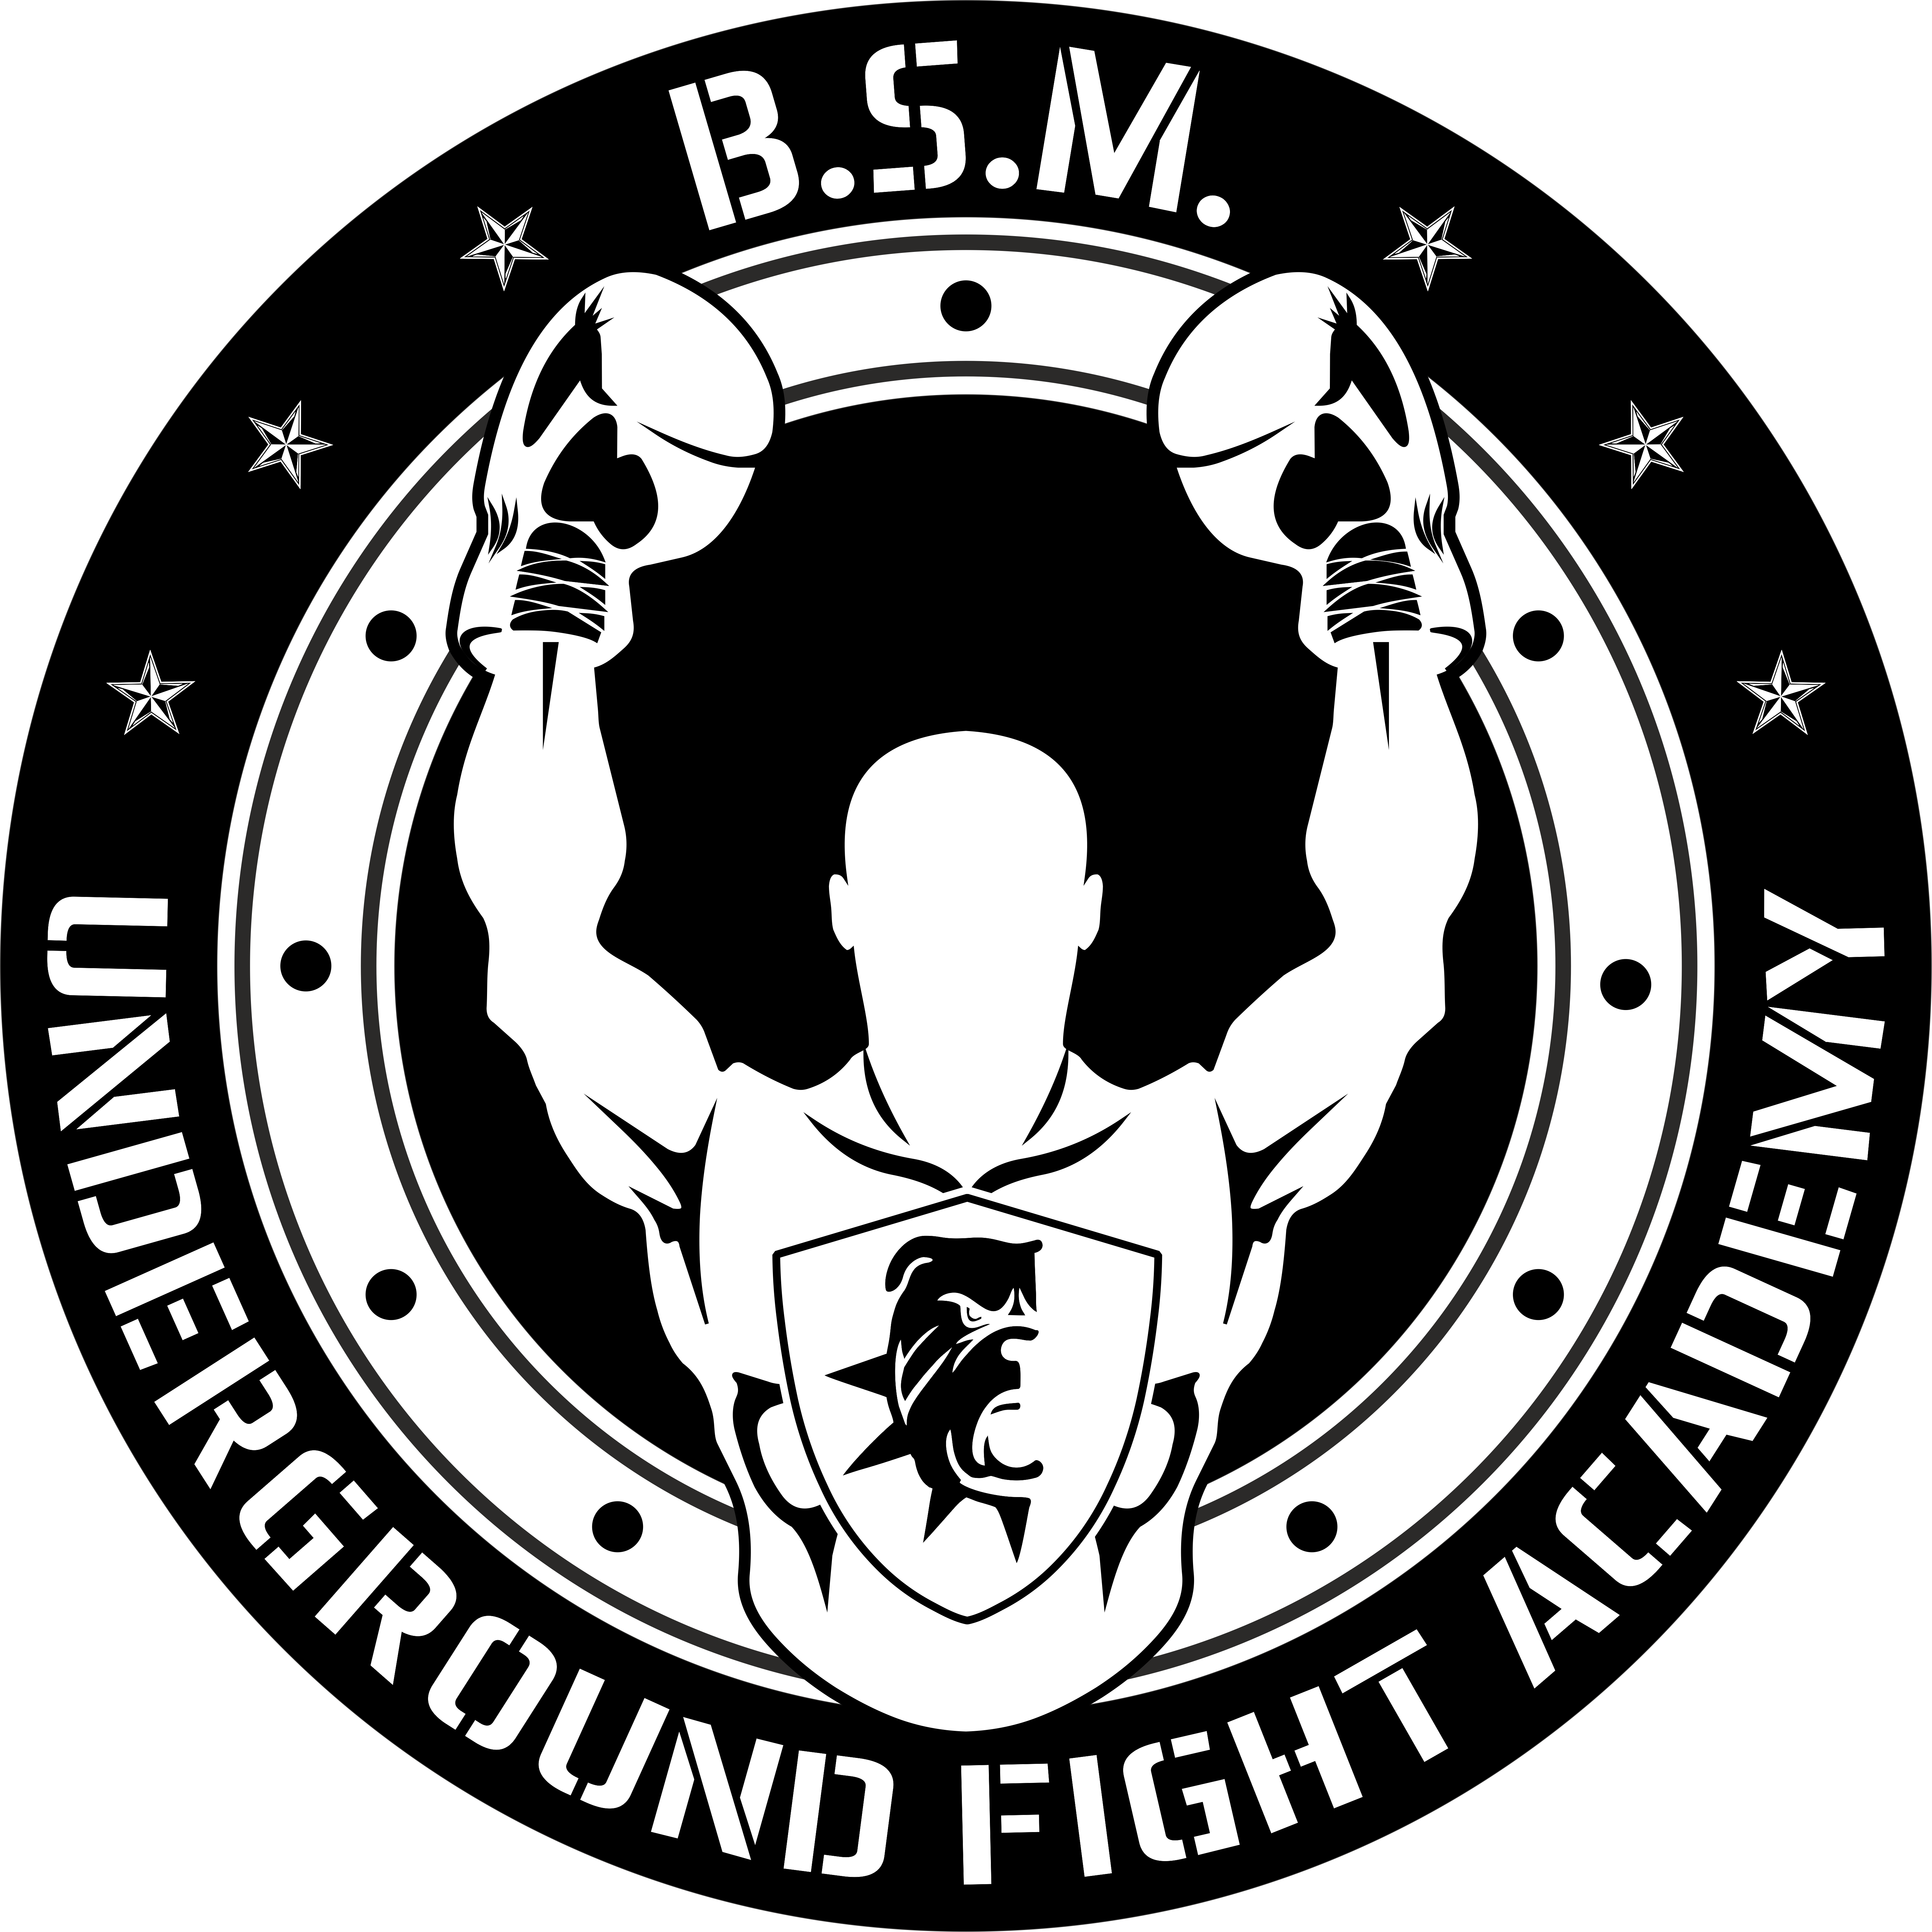 B.S.M. UNDERGROUND FIGHT ACADEMY, z.s.